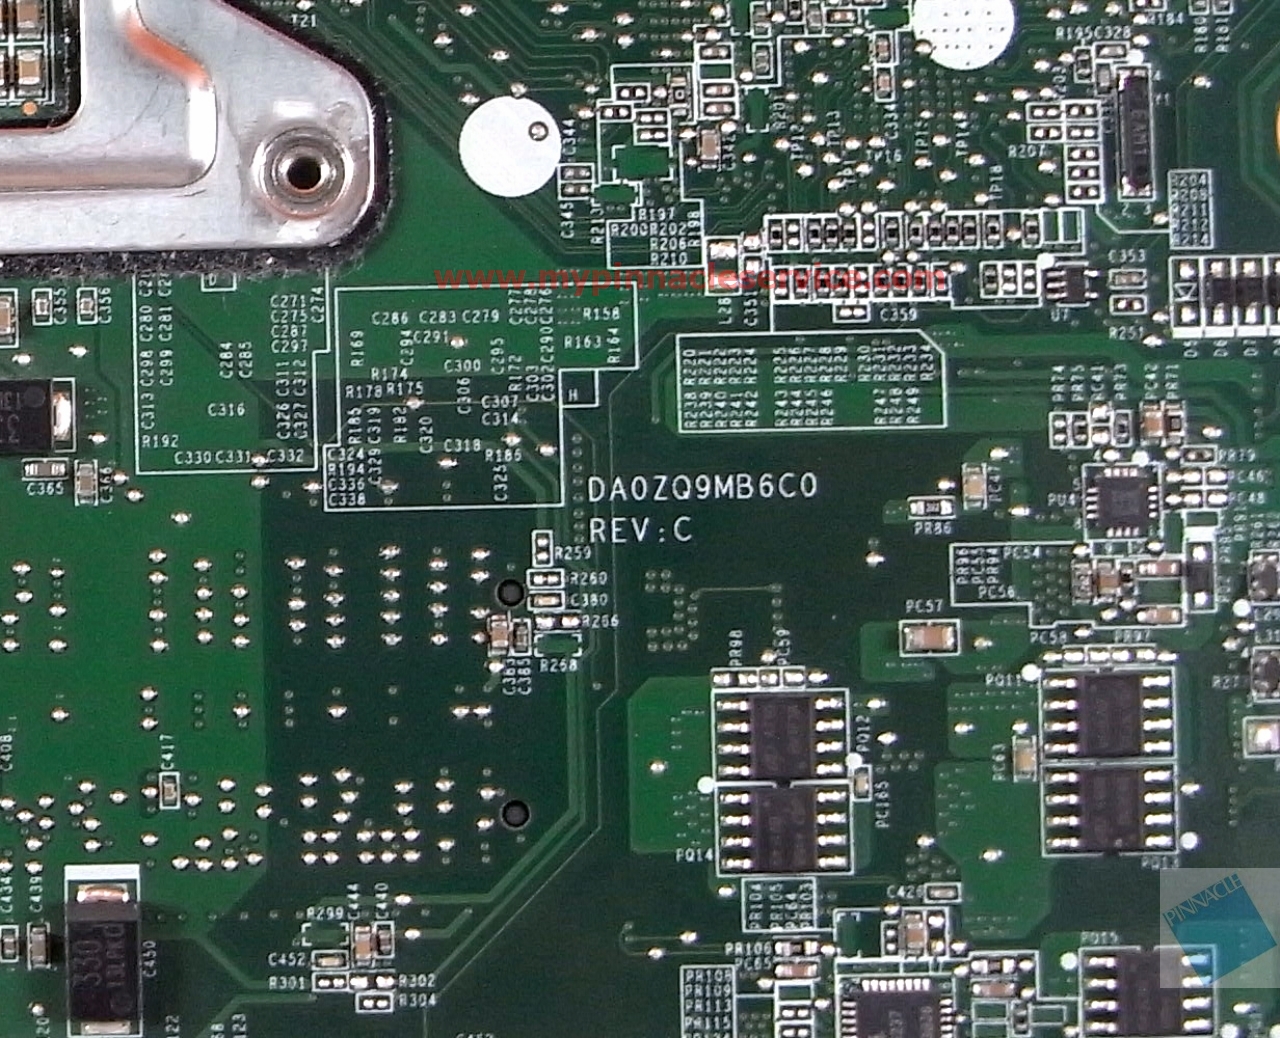 mbrbl06001-motherboard-for-acer-aspire-4738-emachines-d732-da0zq9mb6c0-rimg0031.jpg